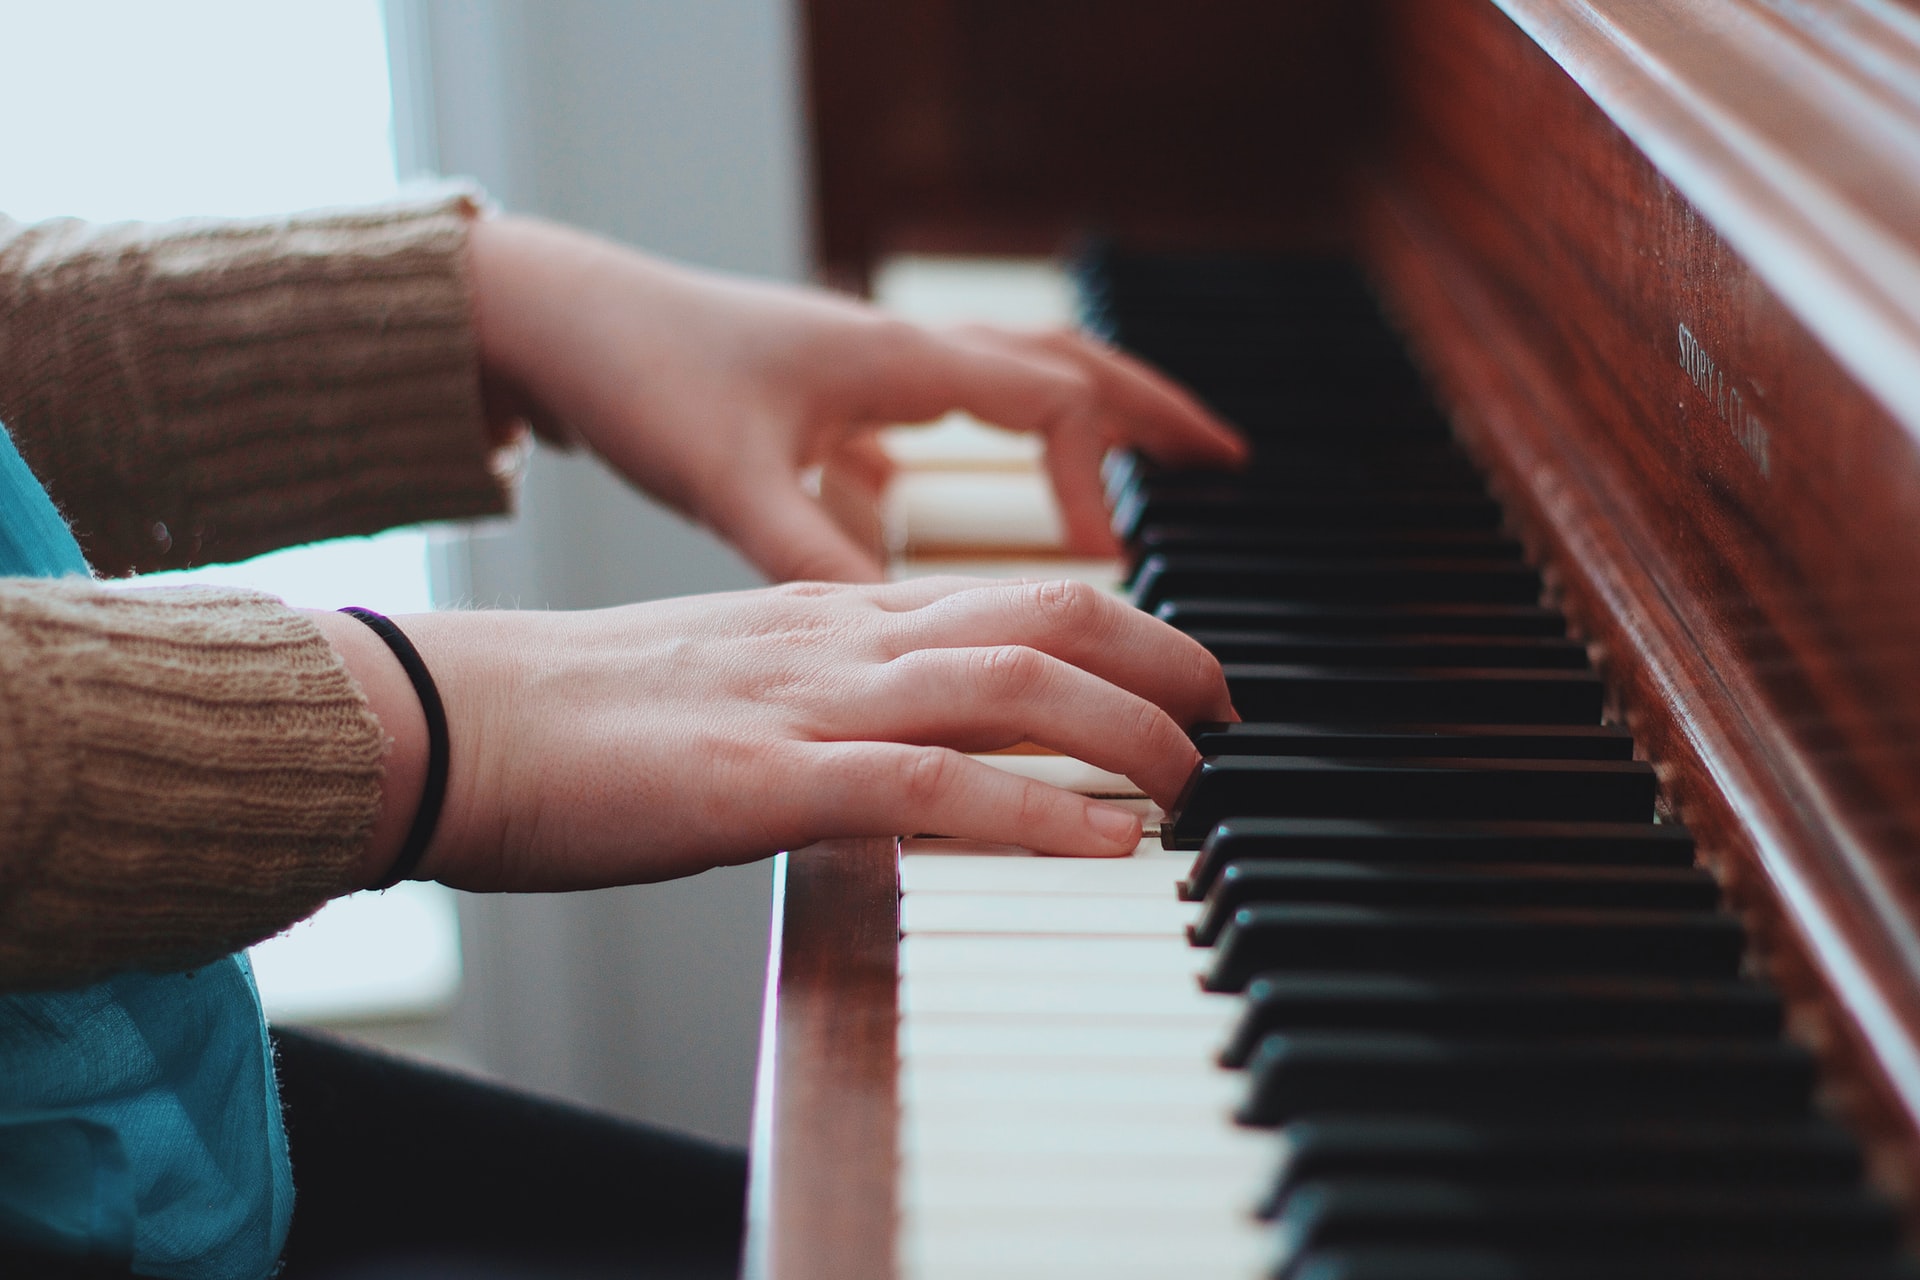 Apprendre le piano avec SYNTHESIA, comment ça marche ?